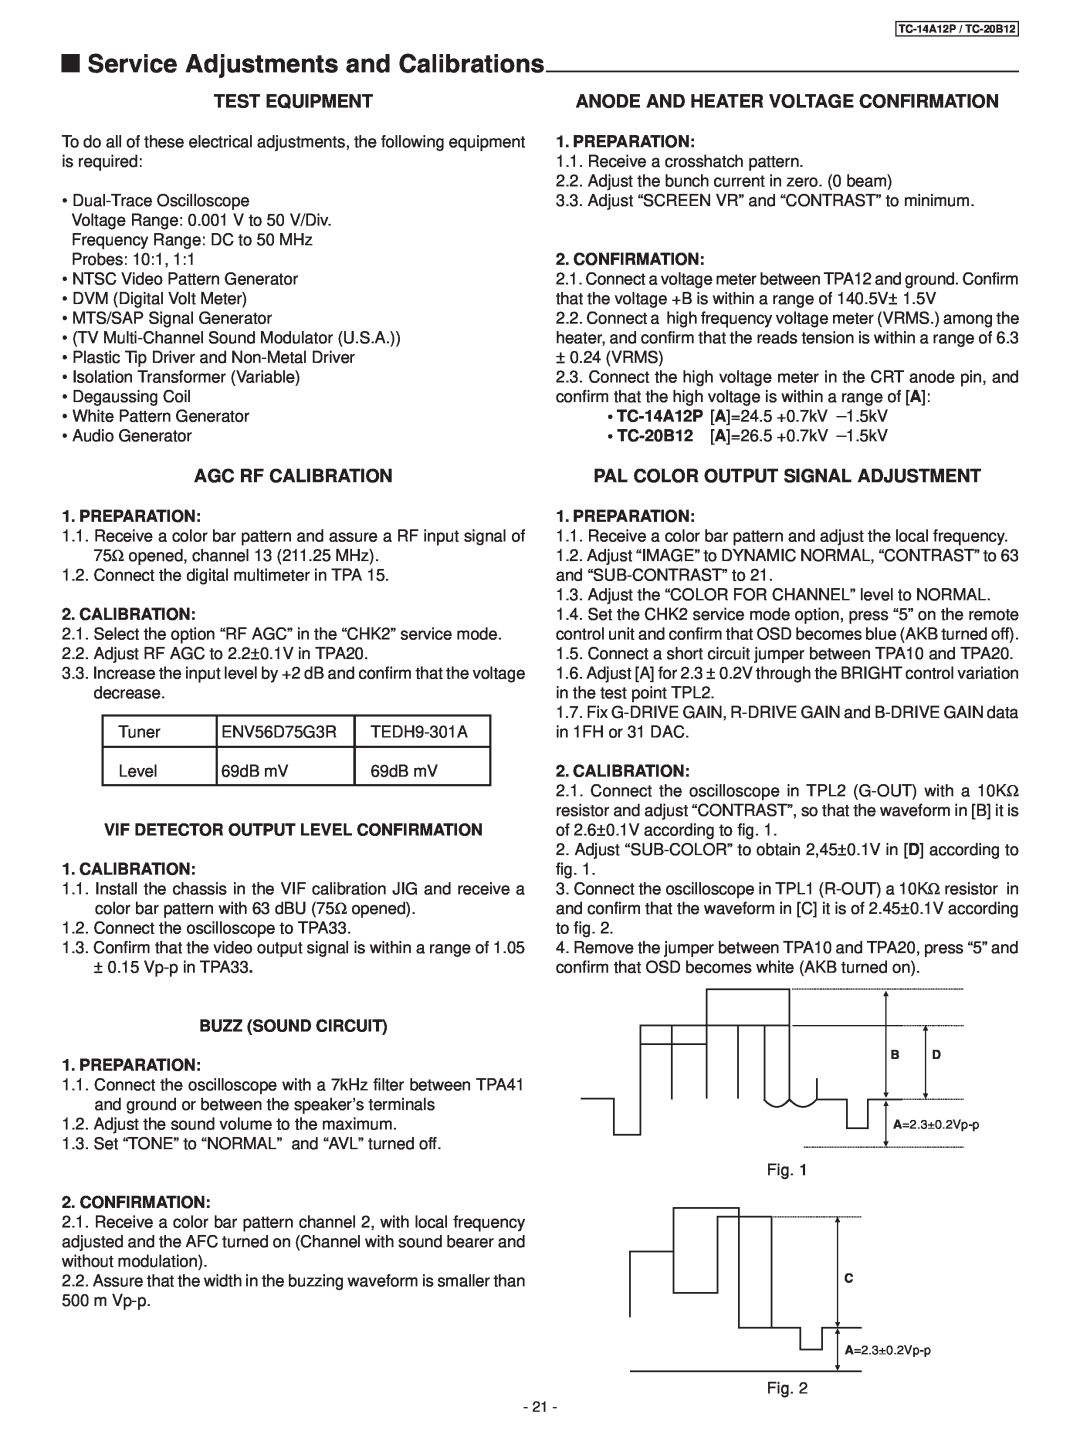 Panasonic TC-14A12P, TC-20B12 service manual Test Equipment, Anode And Heater Voltage Confirmation, Agc Rf Calibration 